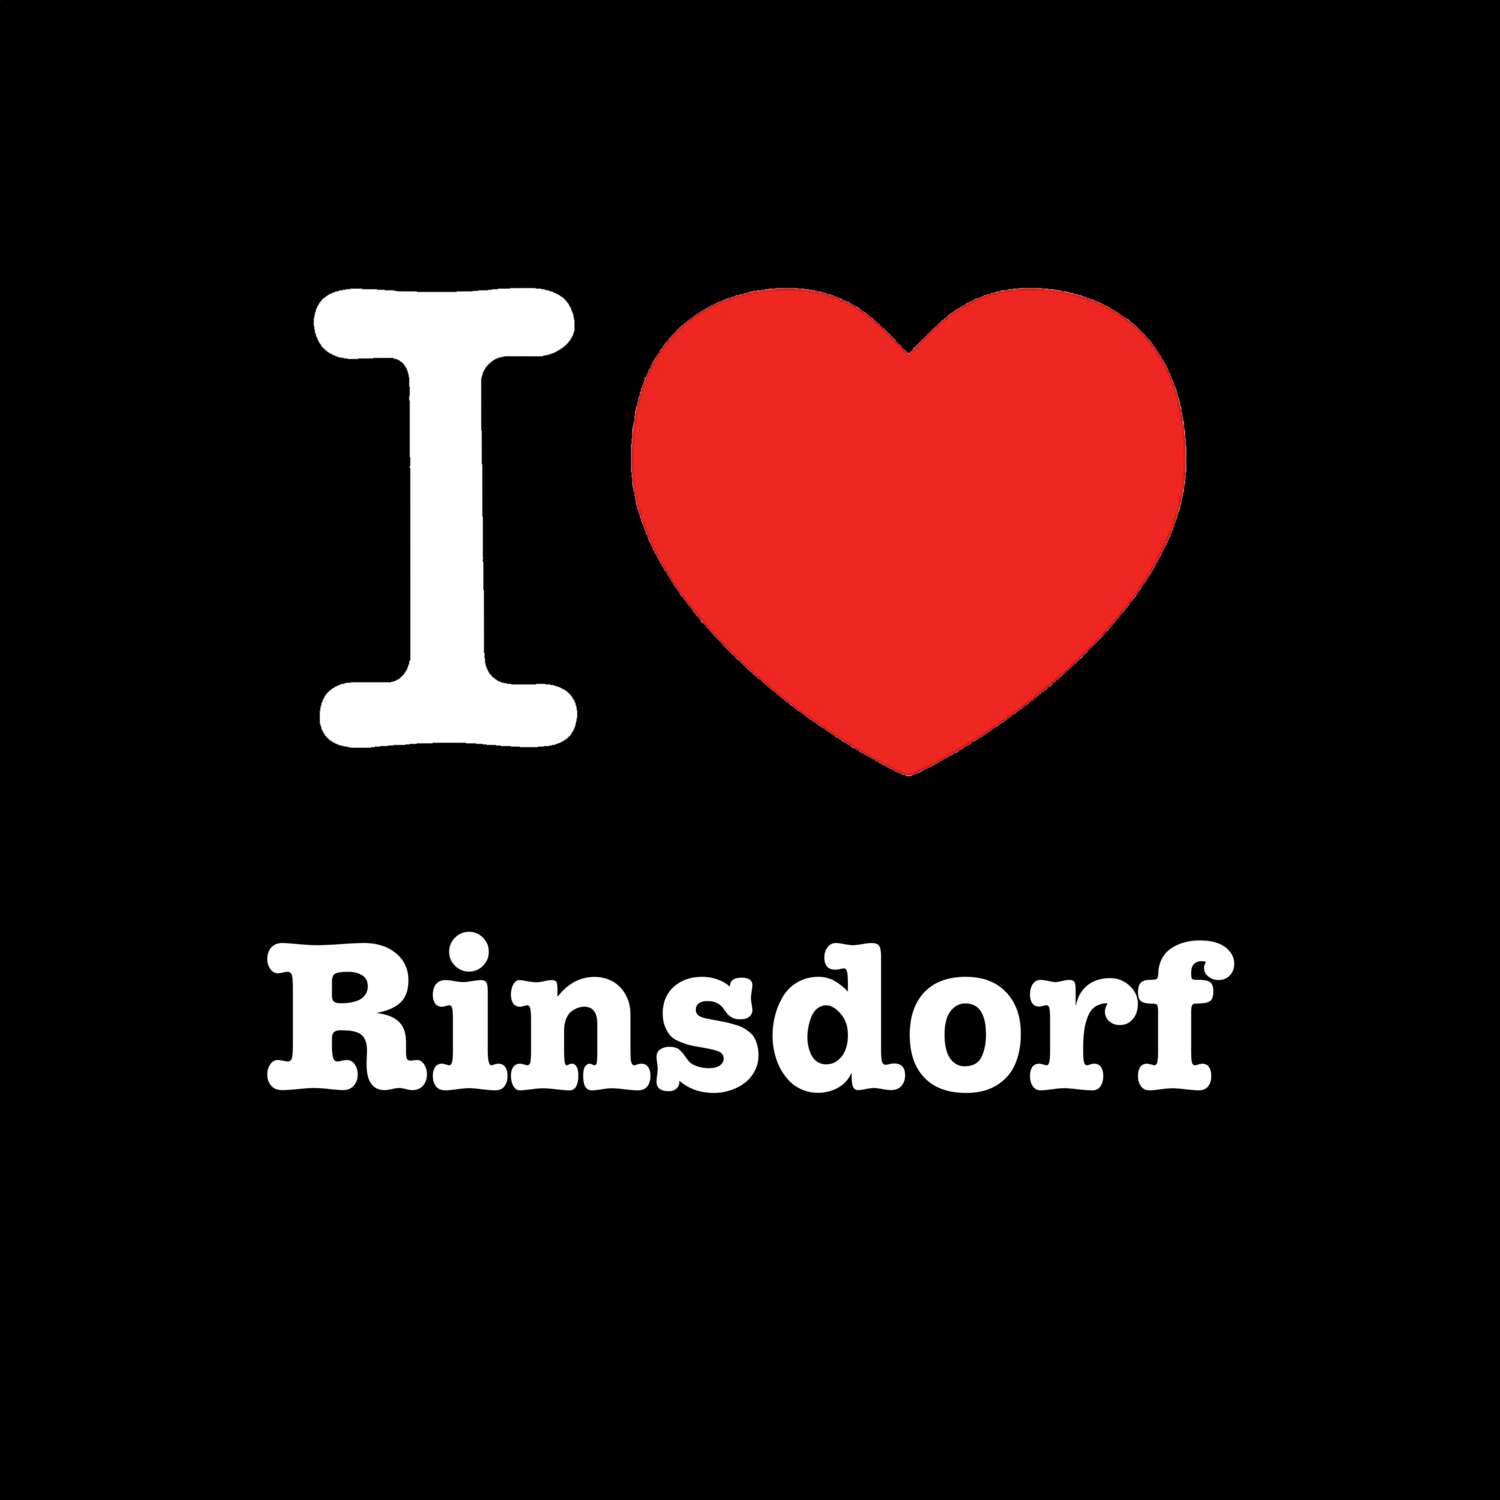 Rinsdorf T-Shirt »I love«